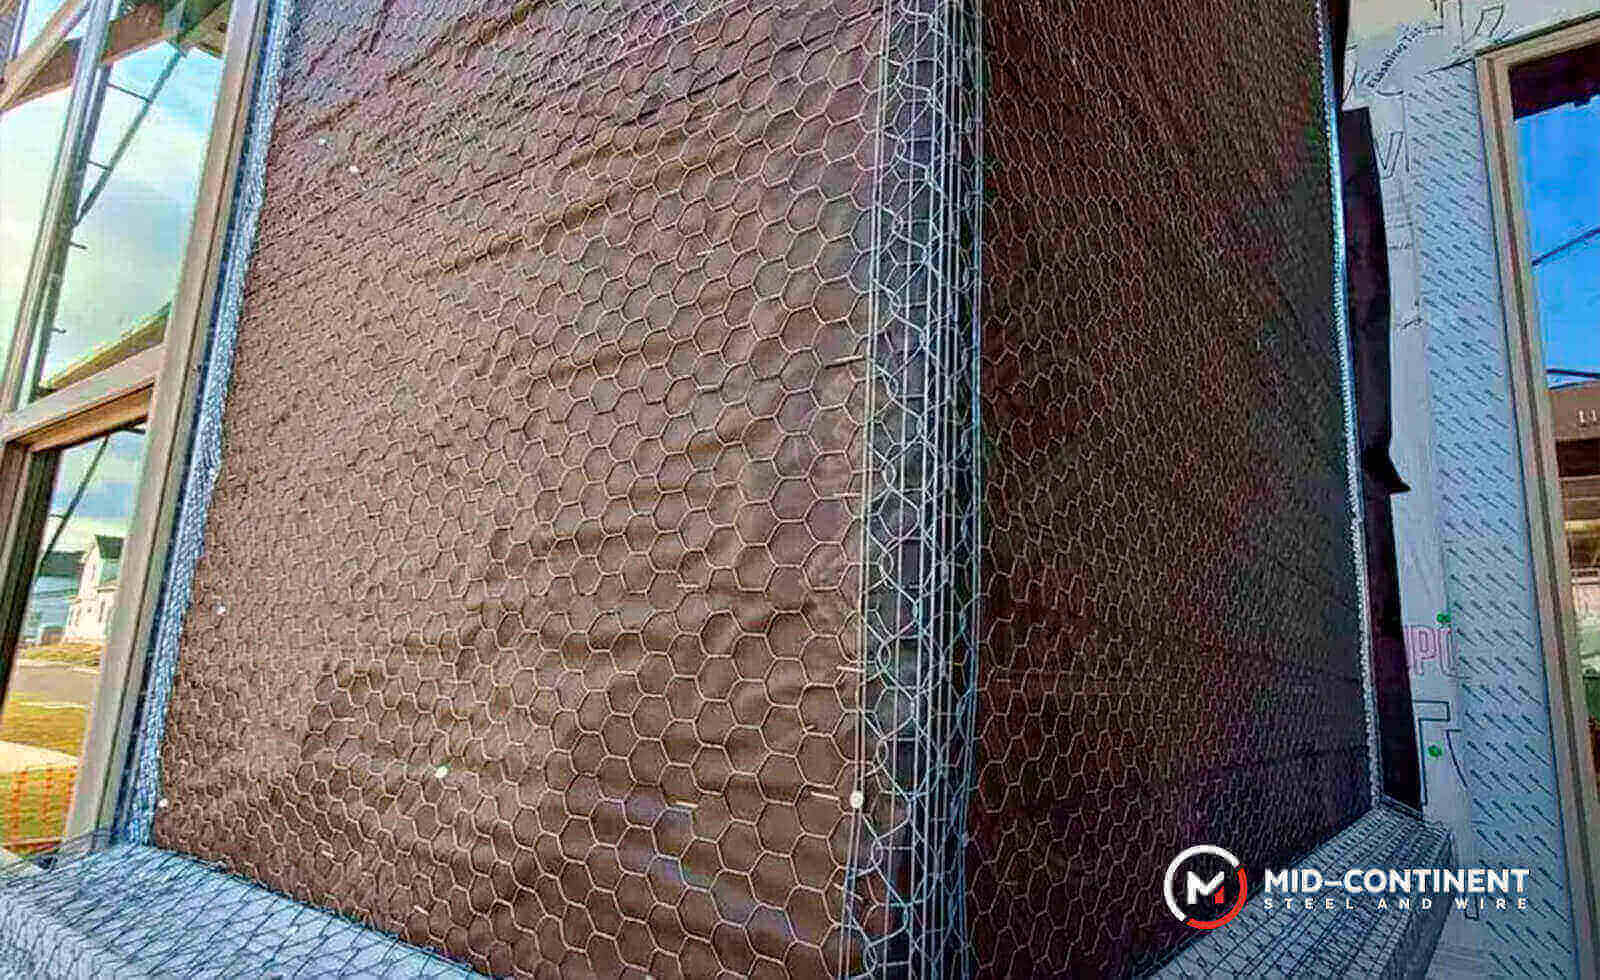 wall construction using stucco netting